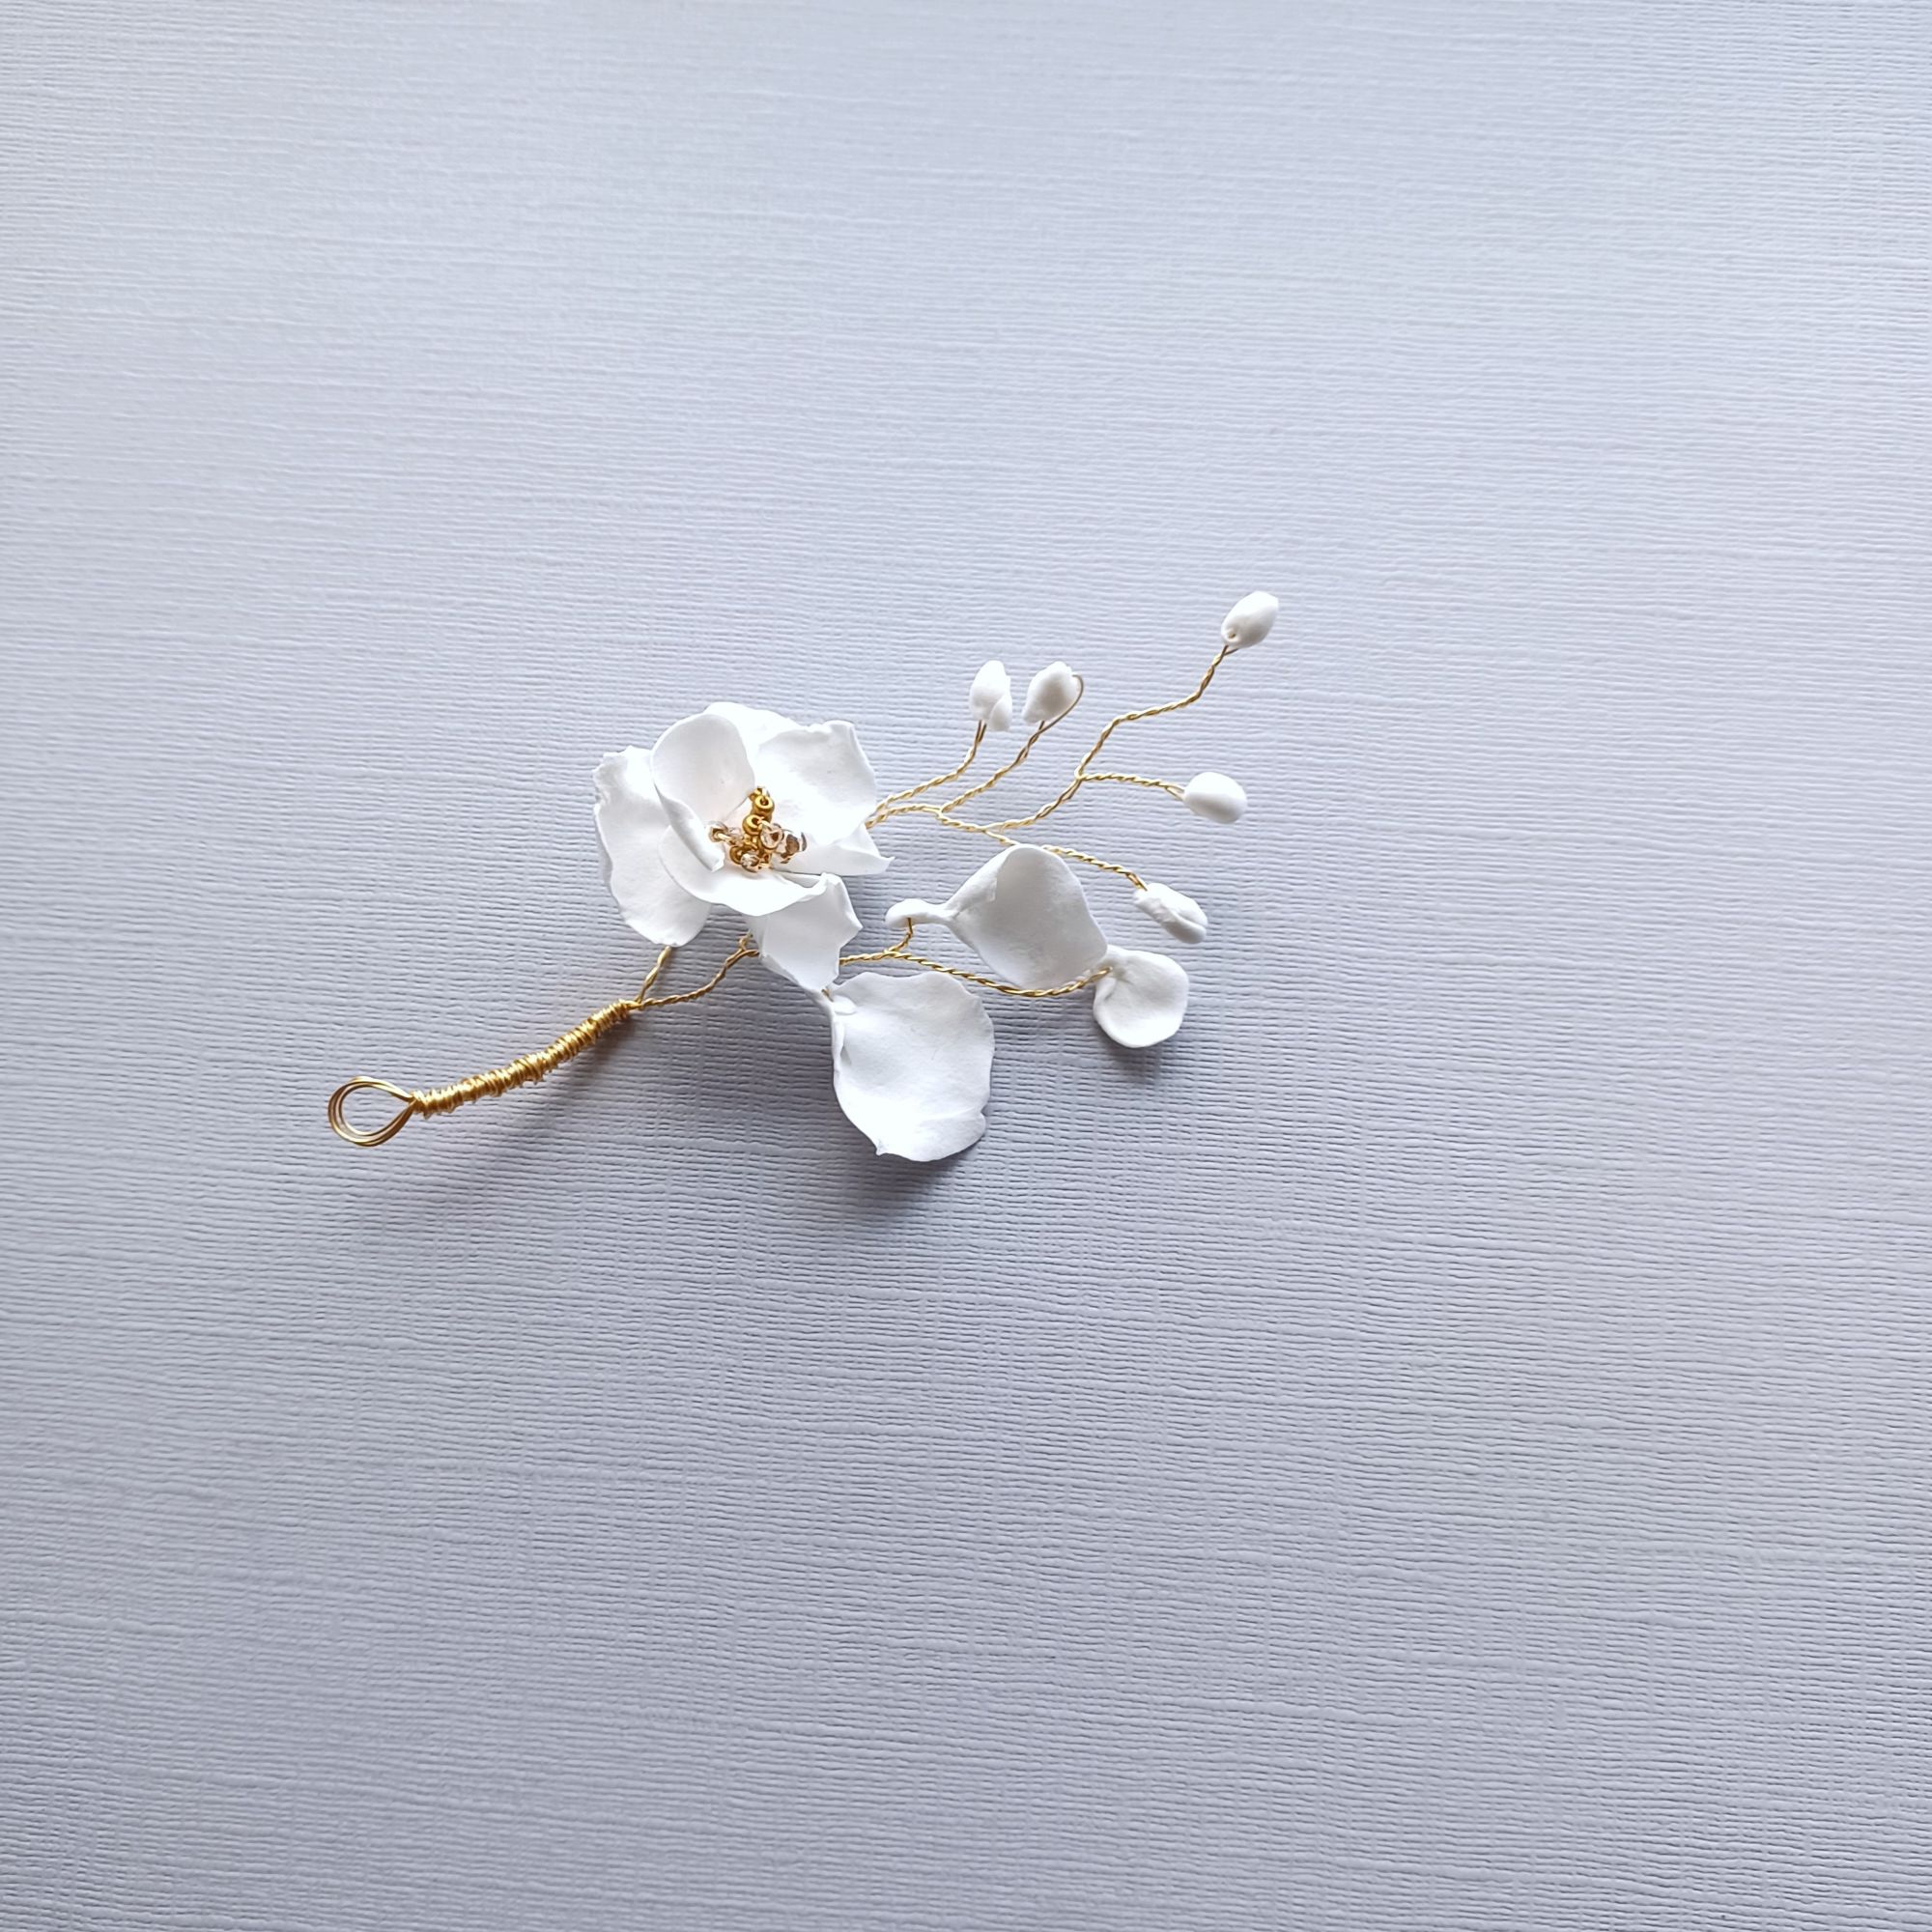 Handmade white flower bridal hair pin-accessory by Beady Bride-UK-Delilah (